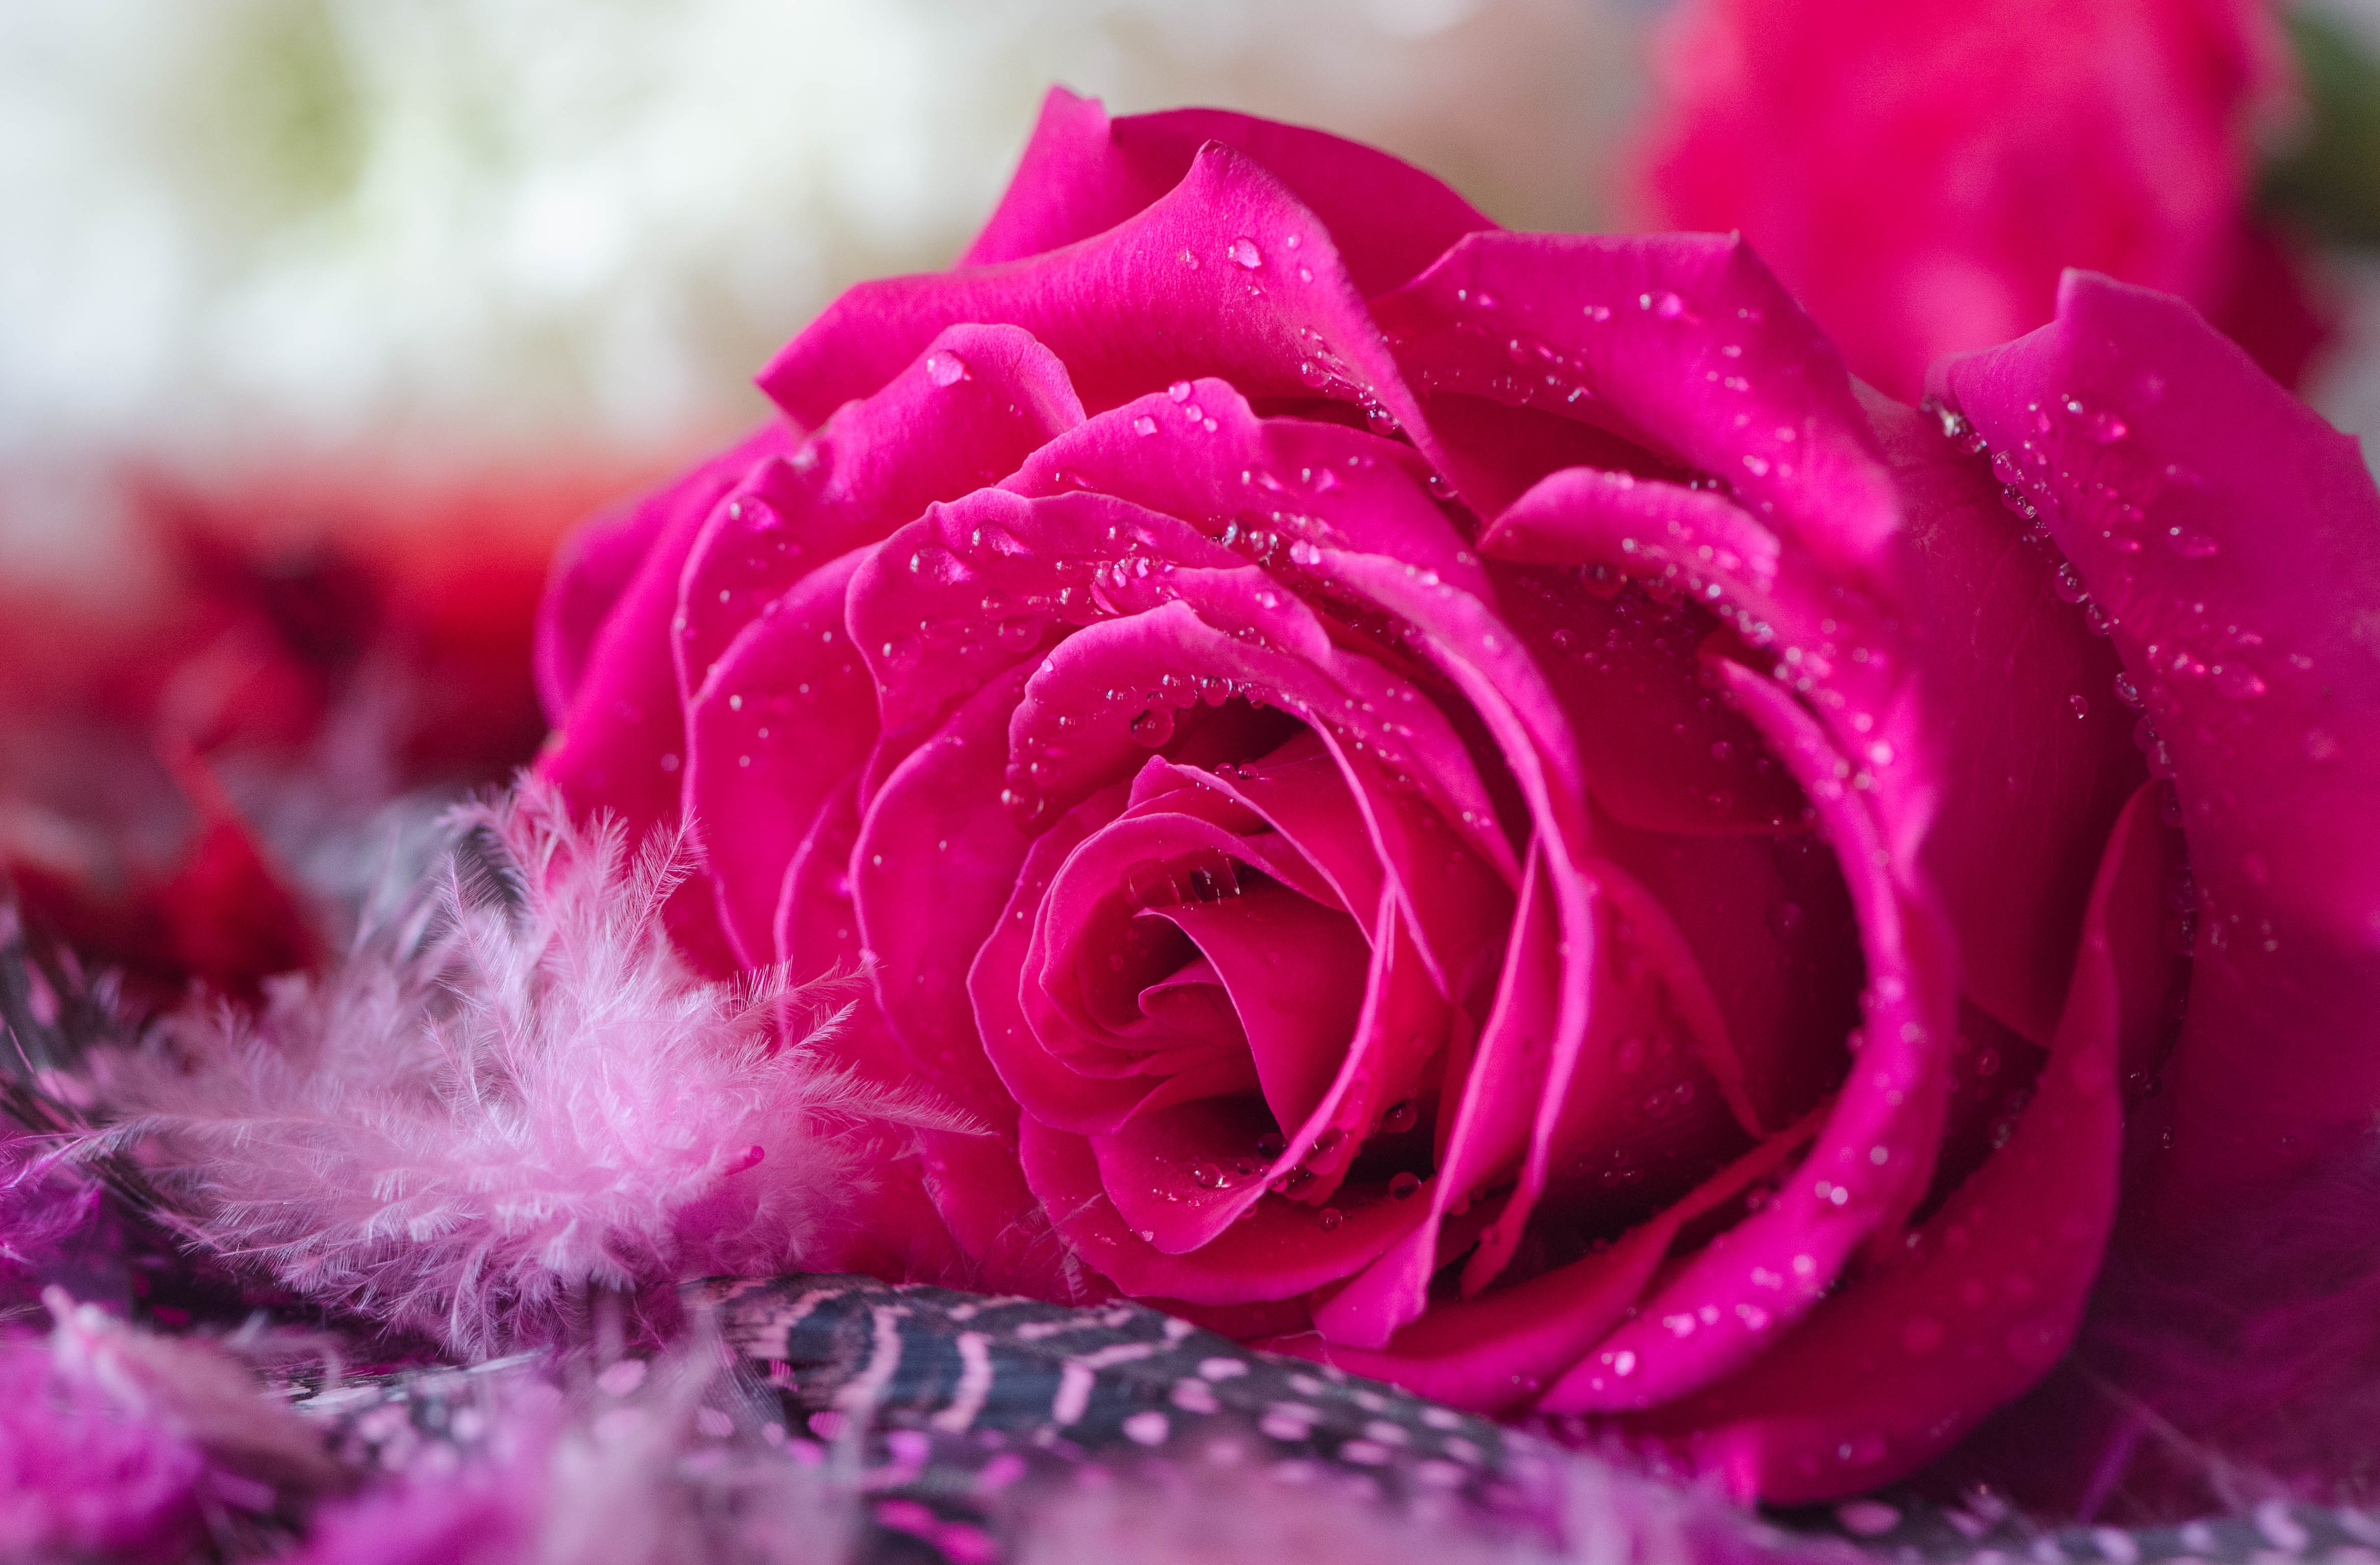  Hot  Pink  Rose 4k Ultra HD Wallpaper  Background Image 